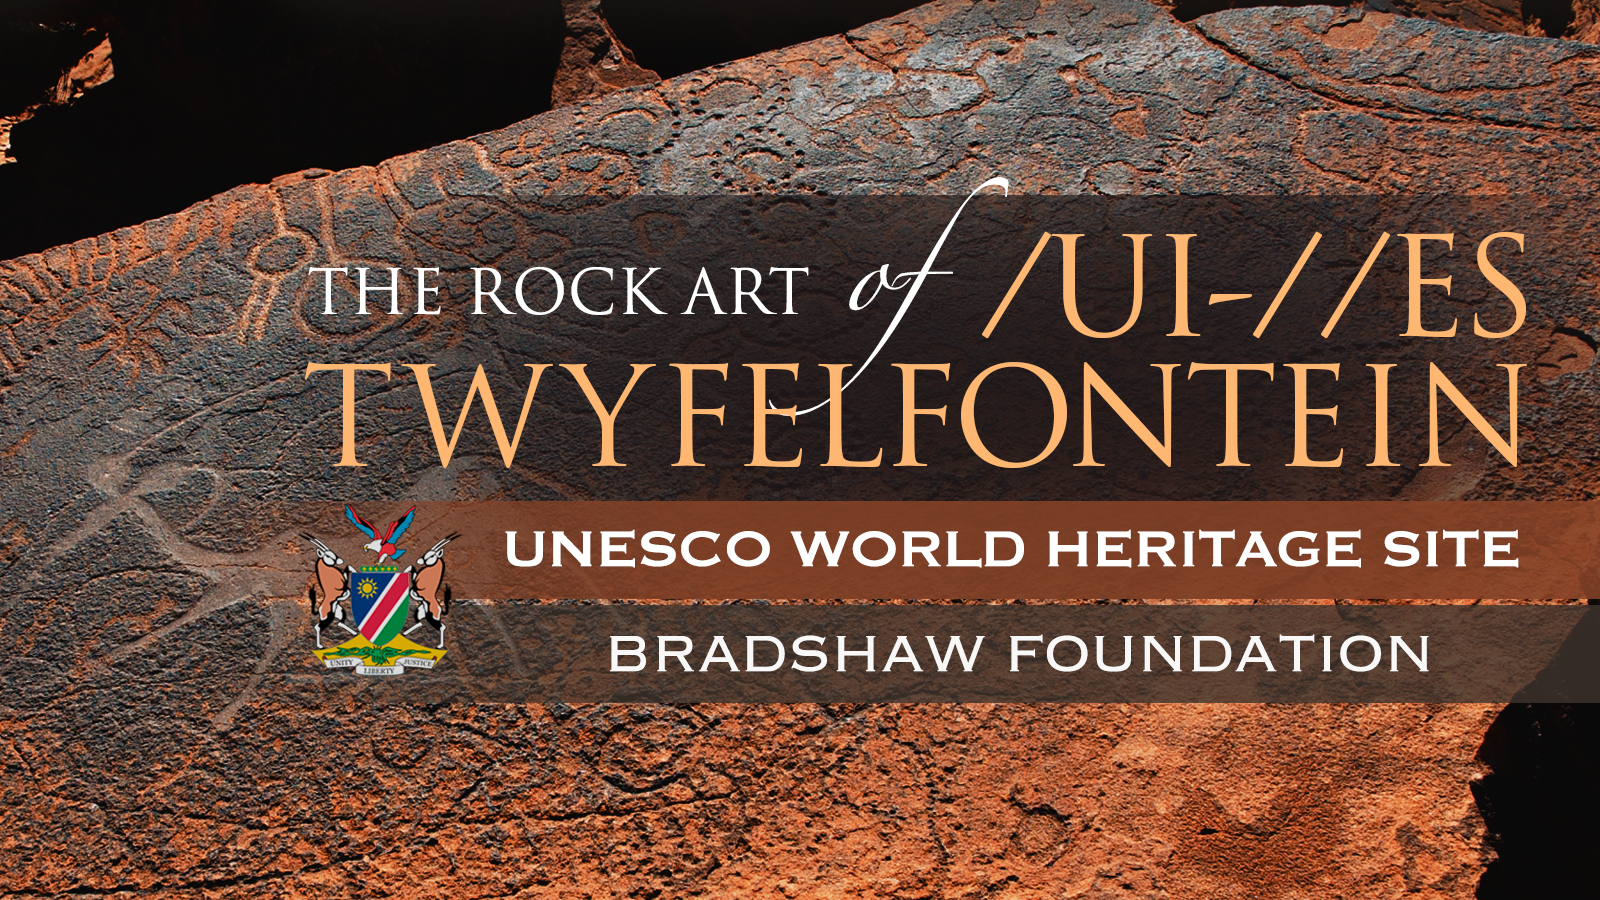 Rock Art Namibia Africa Petroglyph Petroglyphs Engravings Engraving Twyfelfontein /Ui- //aes UNESCO World Heritage Site Bradshaw Foundation Rock Art Network RAN